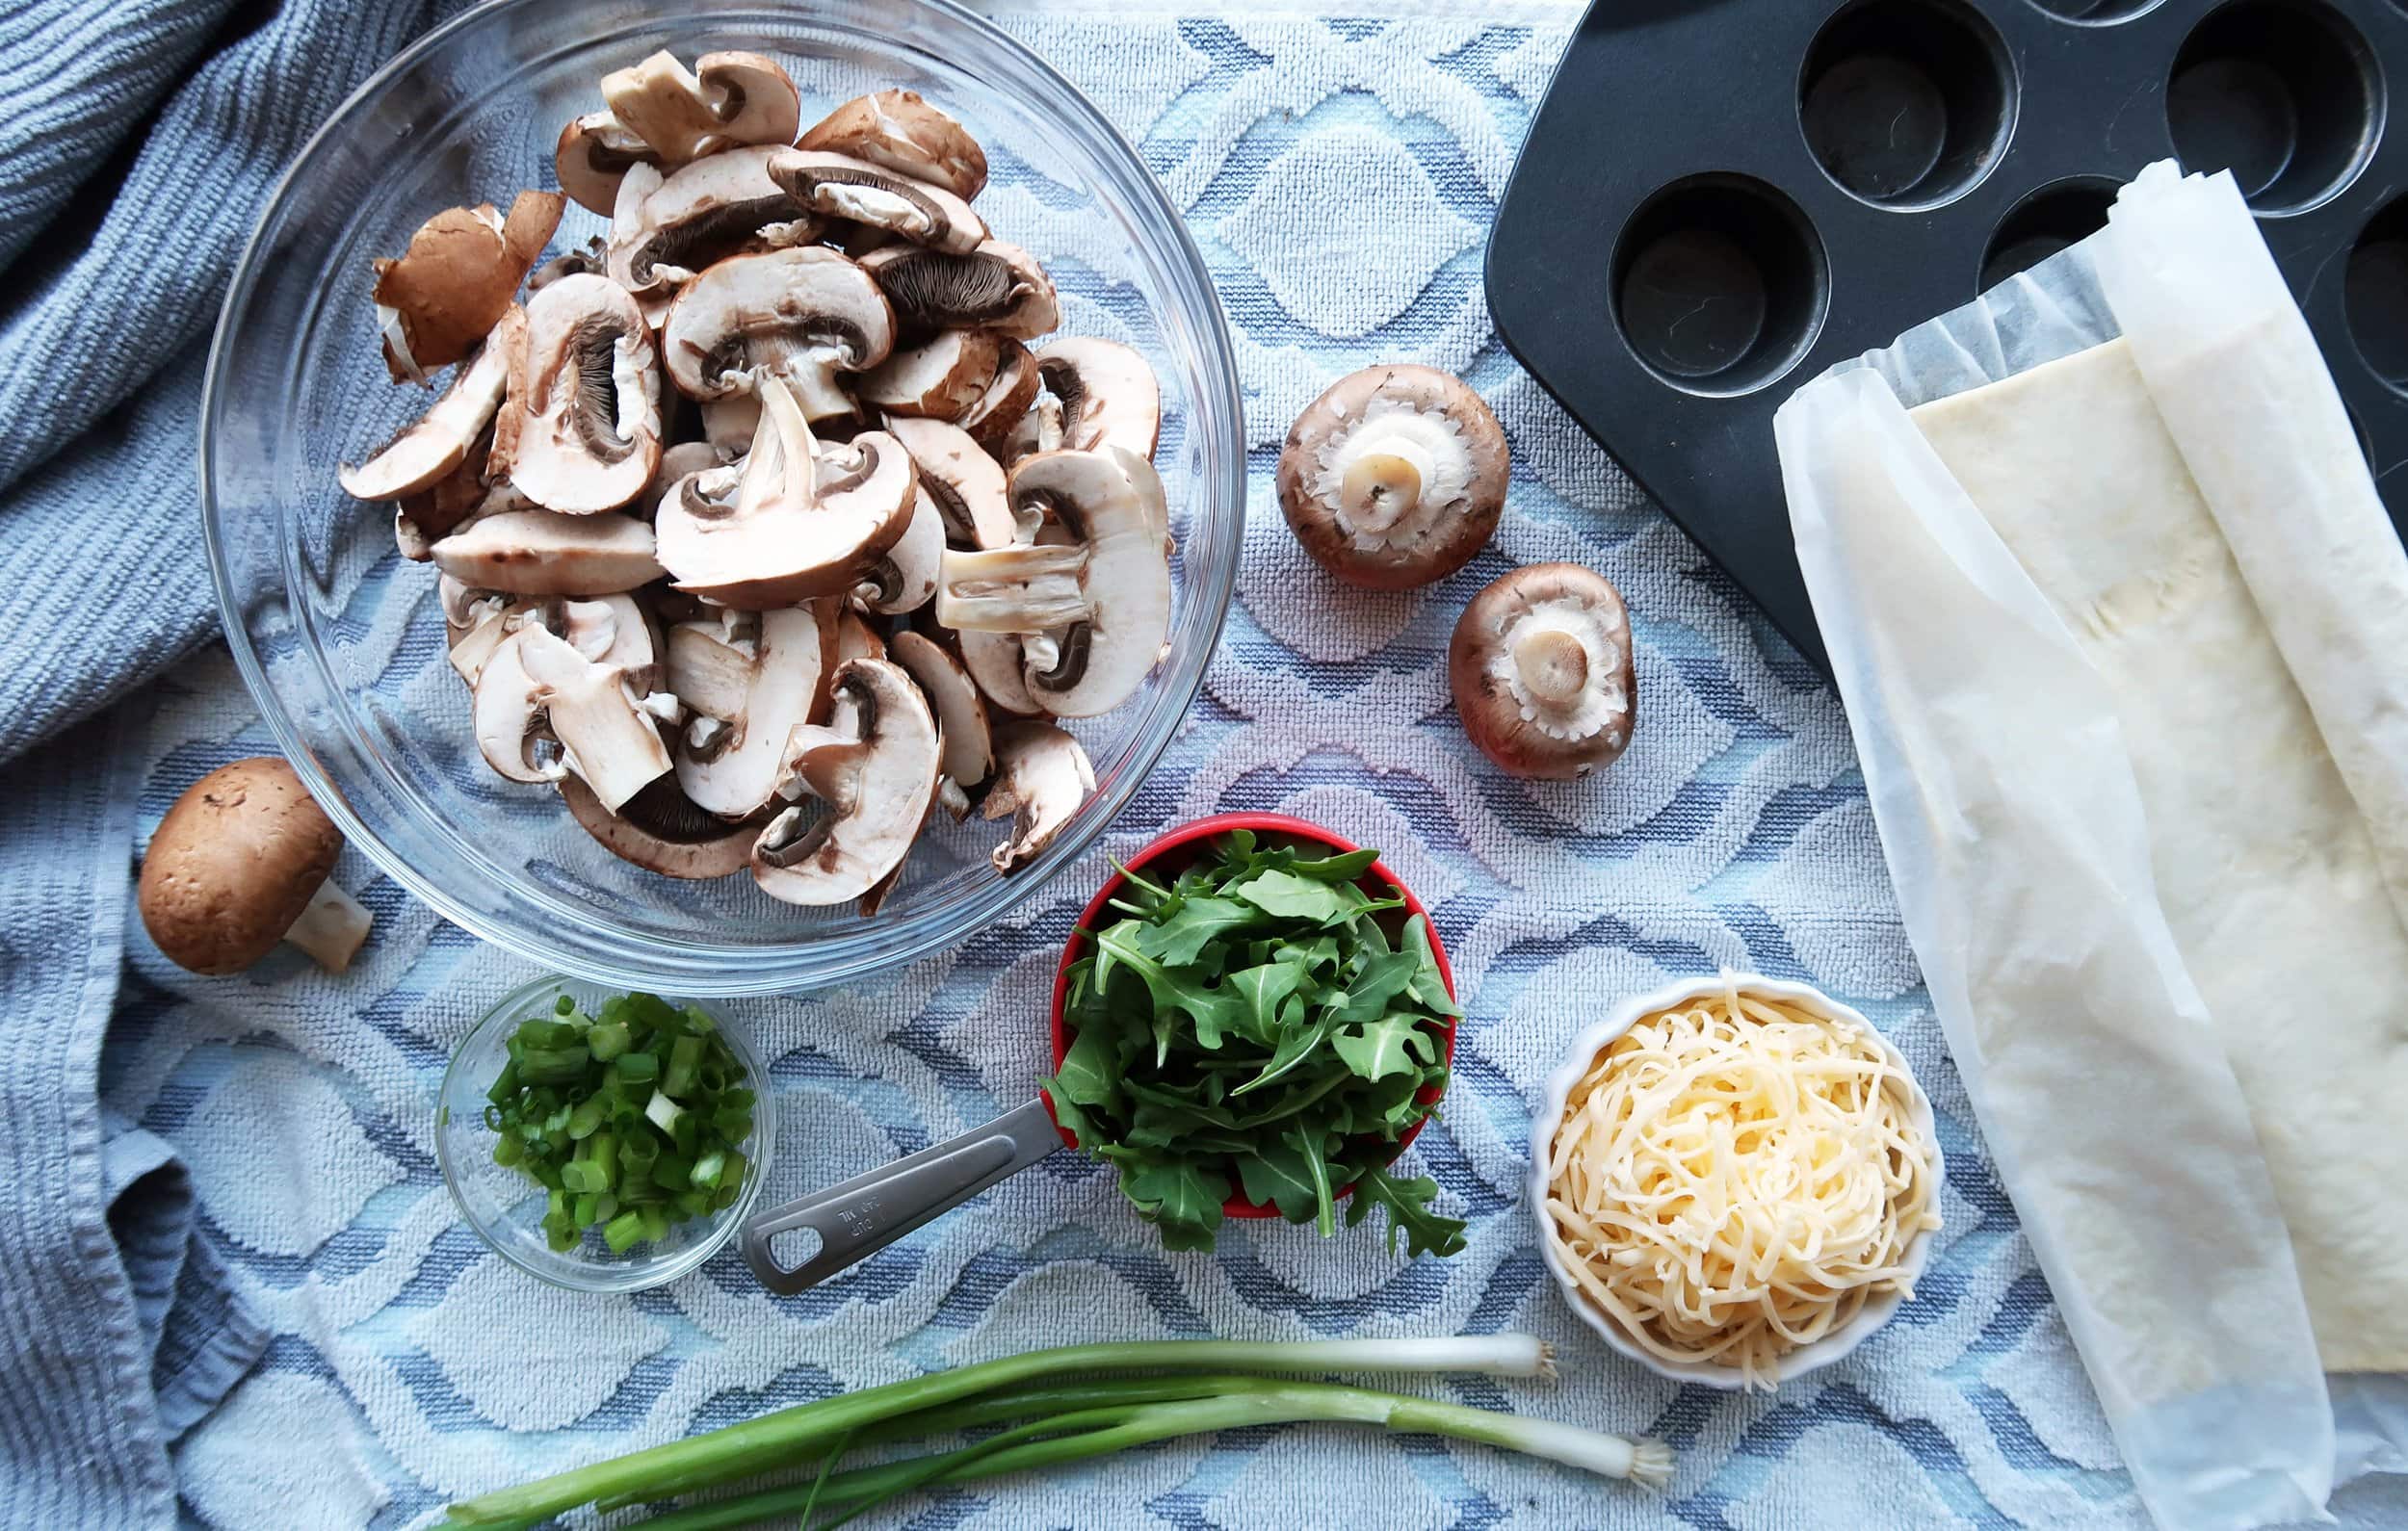 Mushrooms, green onions, arugula, and cheese.